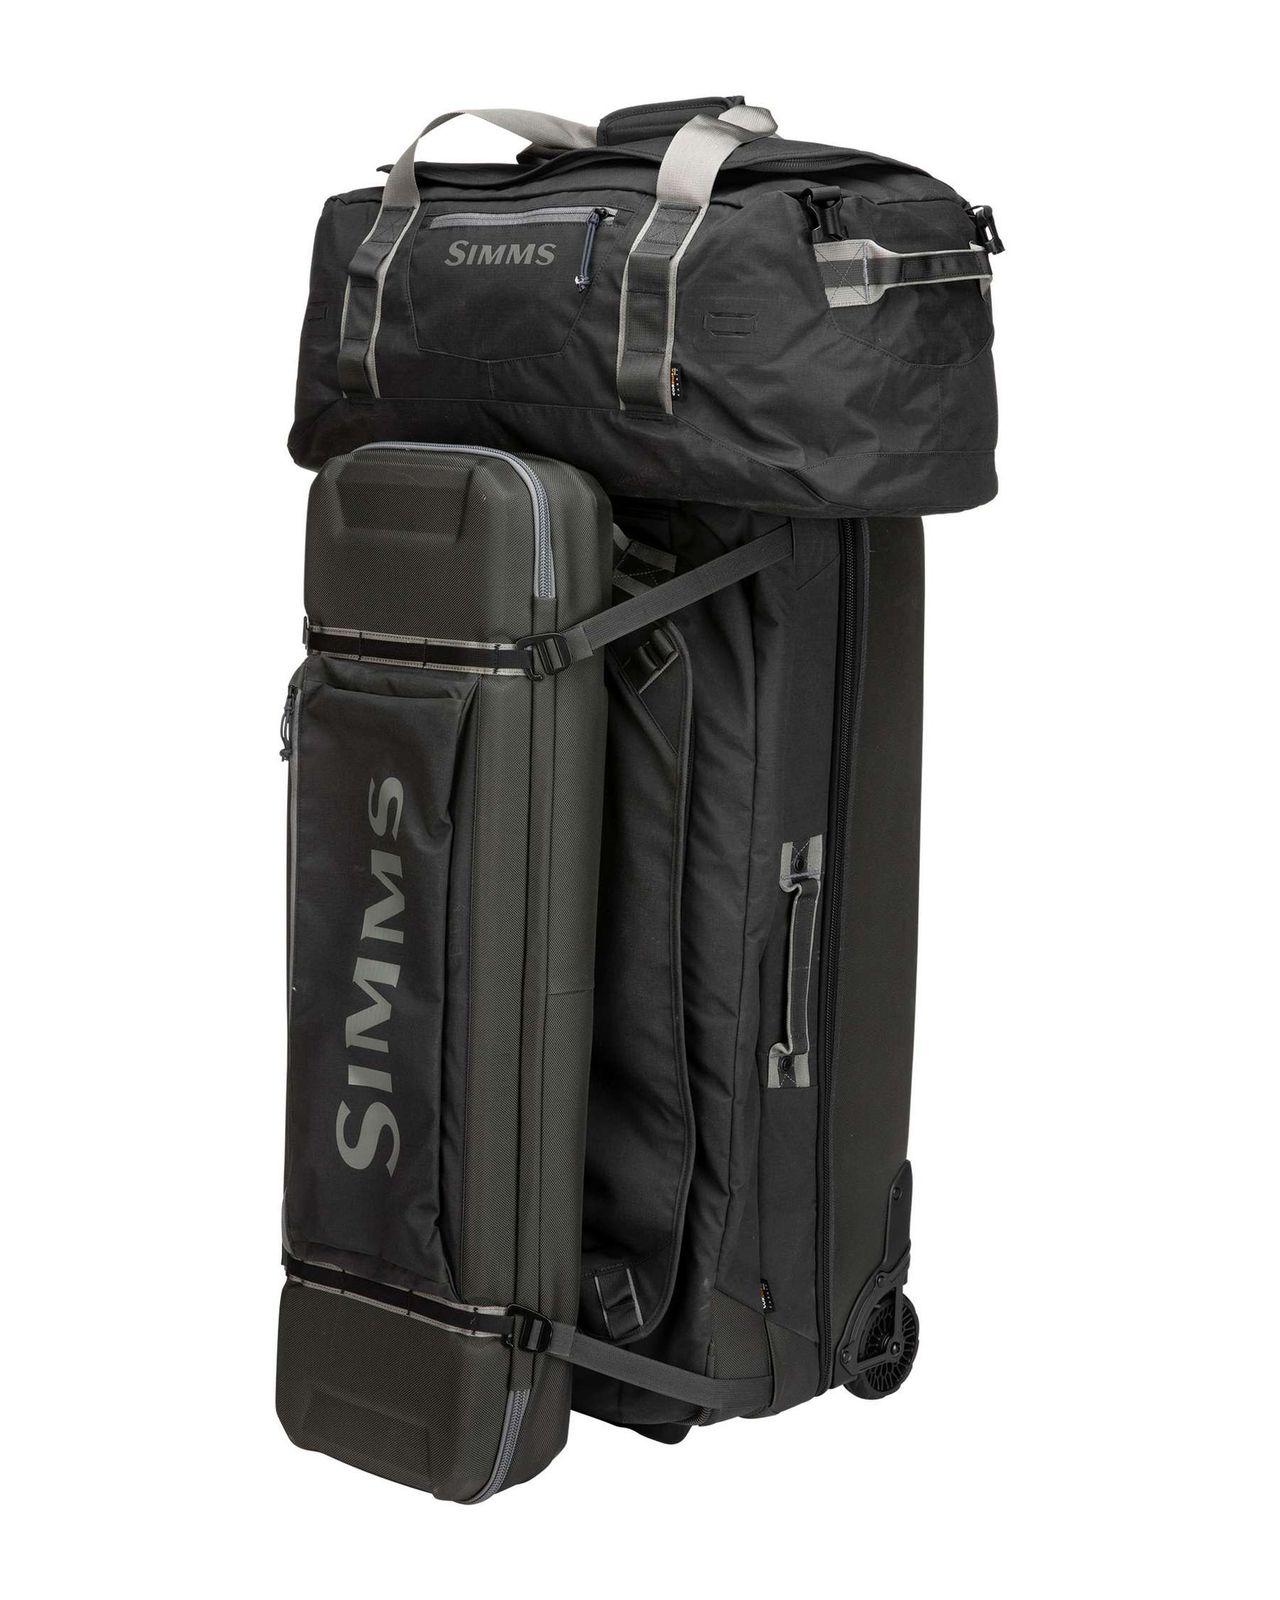 simms-travel-luggage